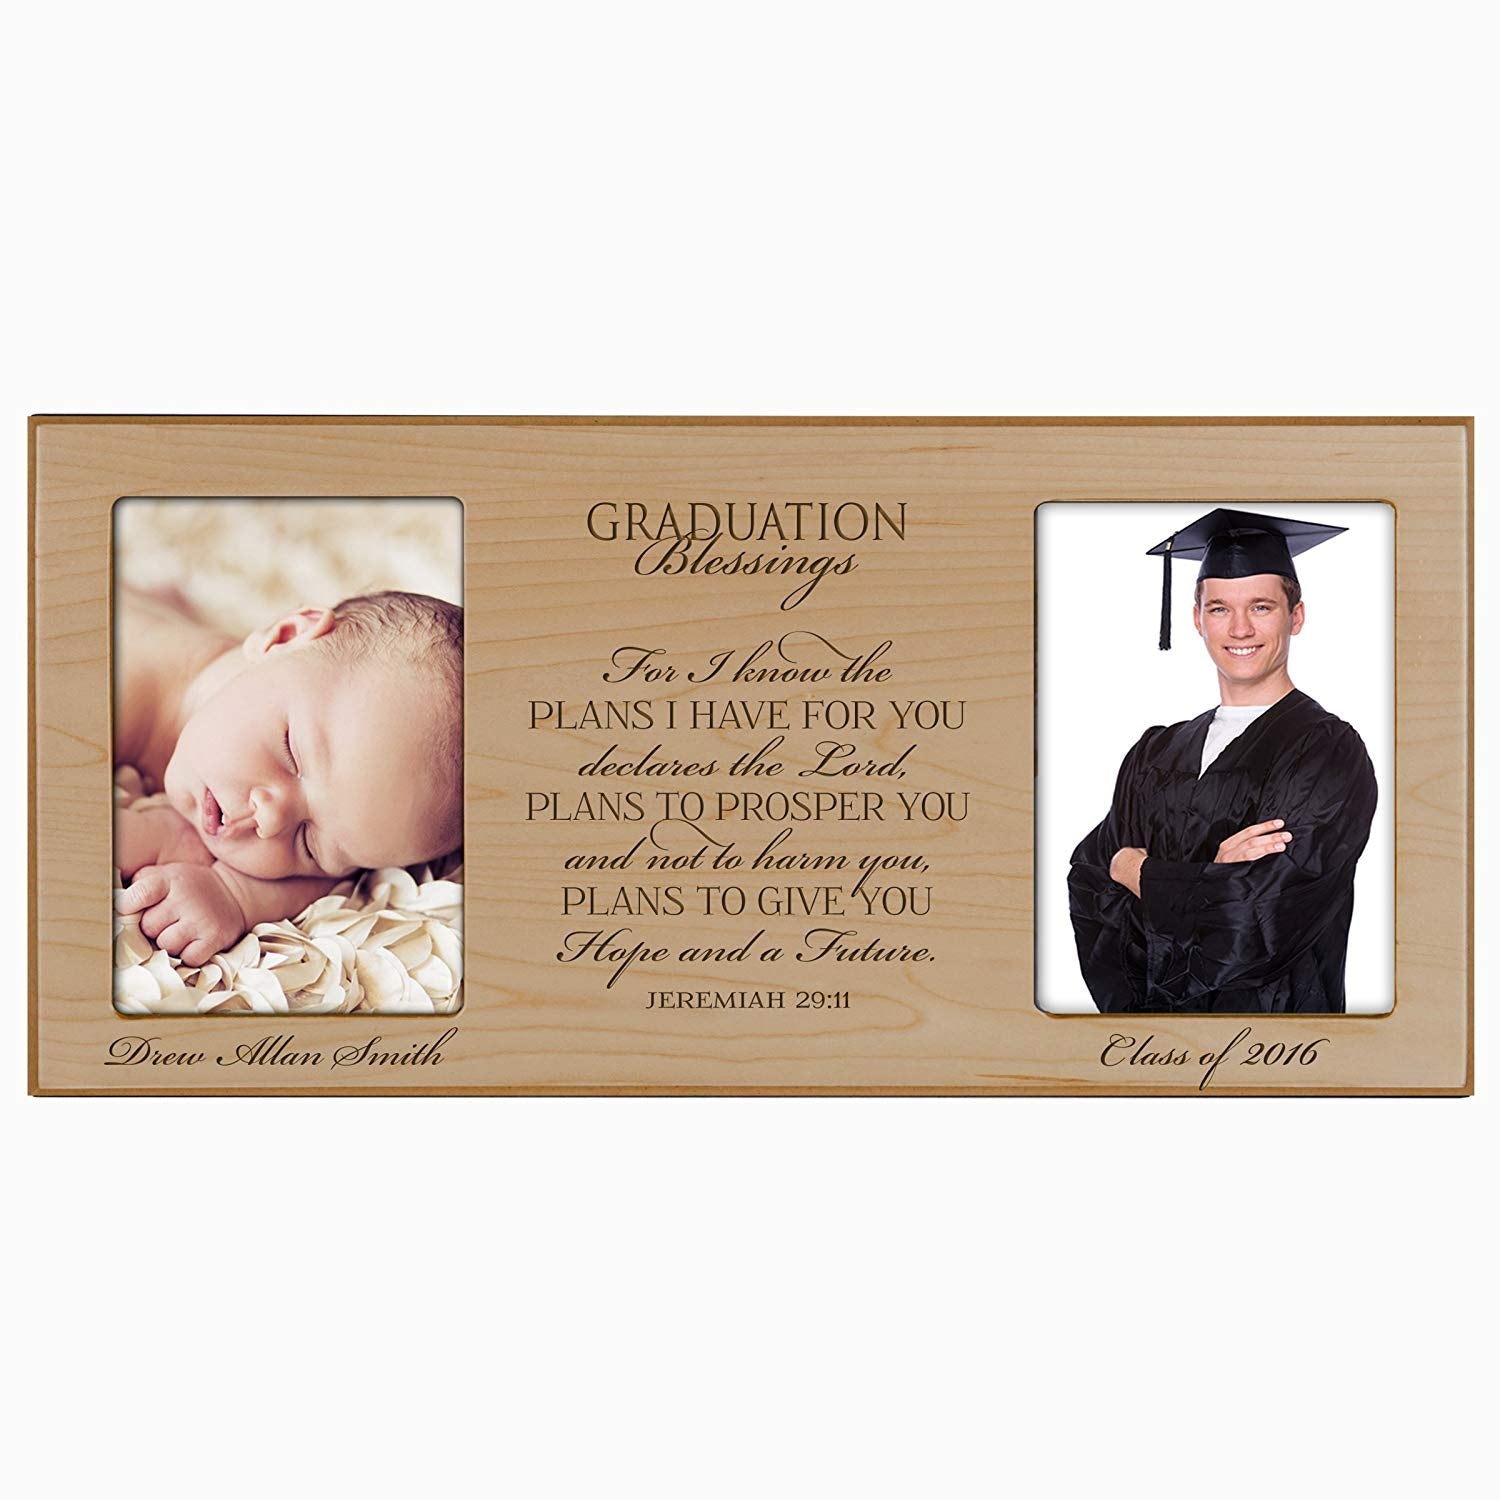 Personalized Graduation Double Photo Frame - Graduation Blessings - LifeSong Milestones